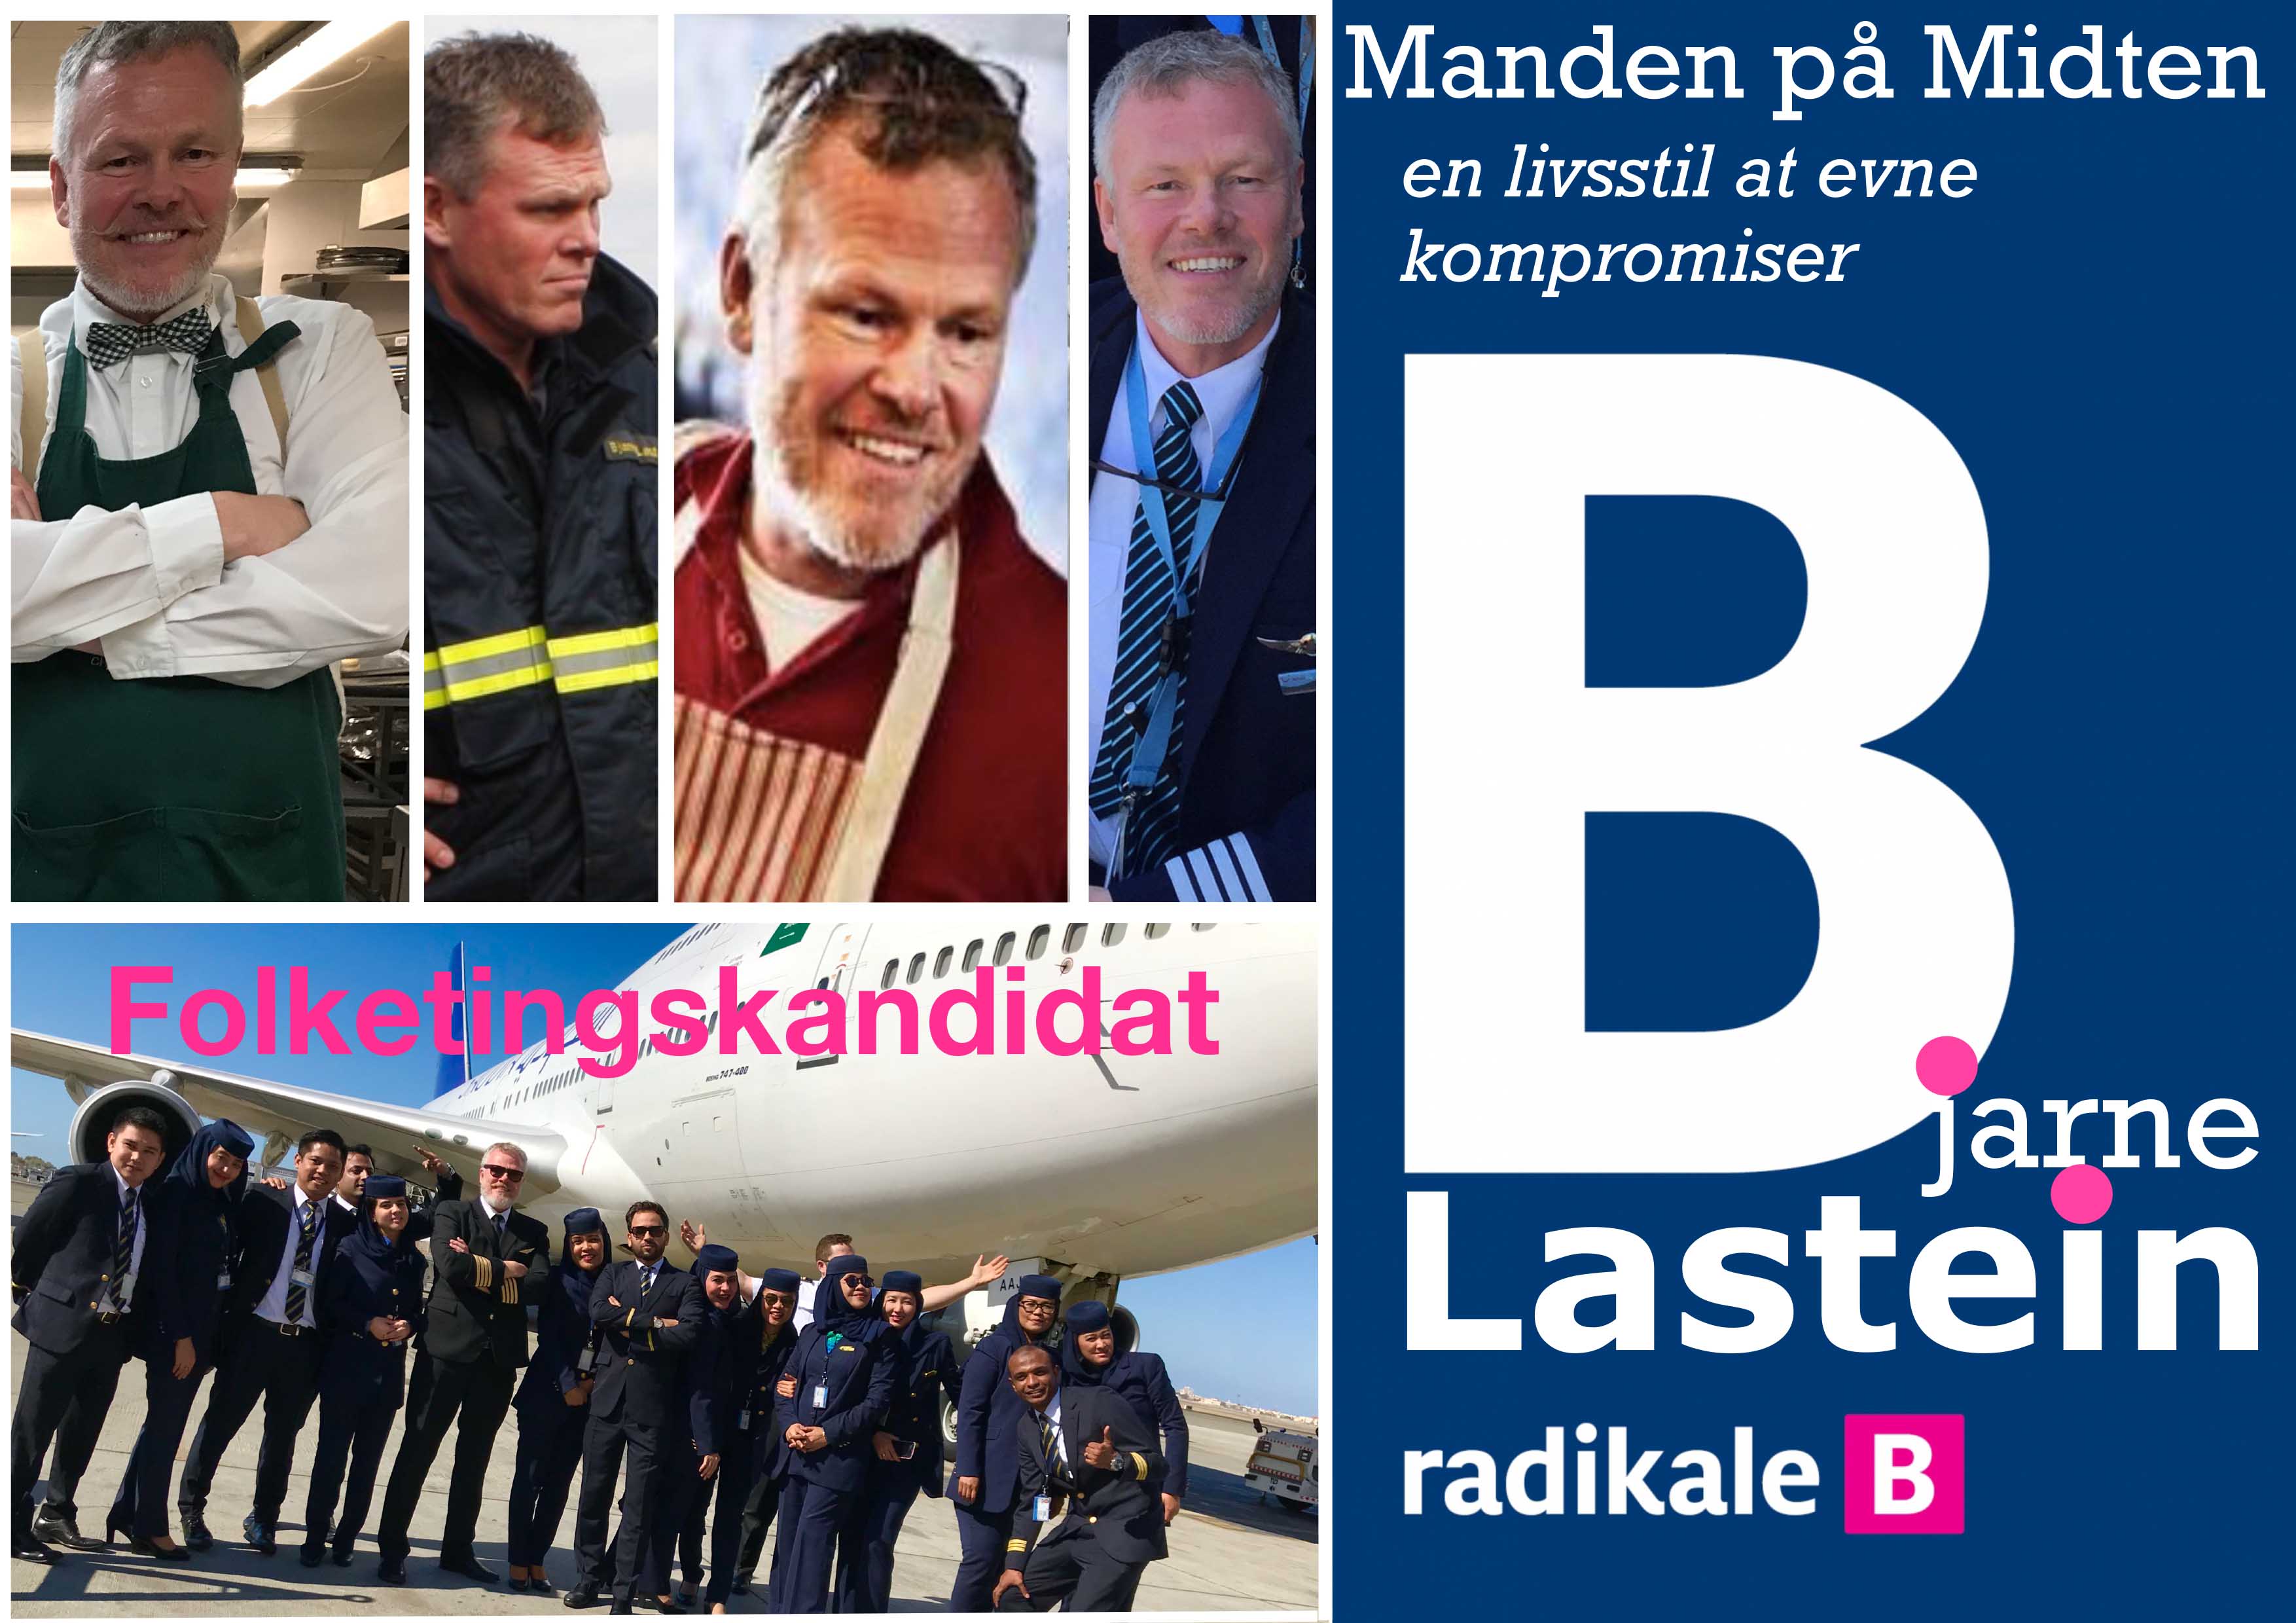 Bjarne Lastein - folketingskandidat